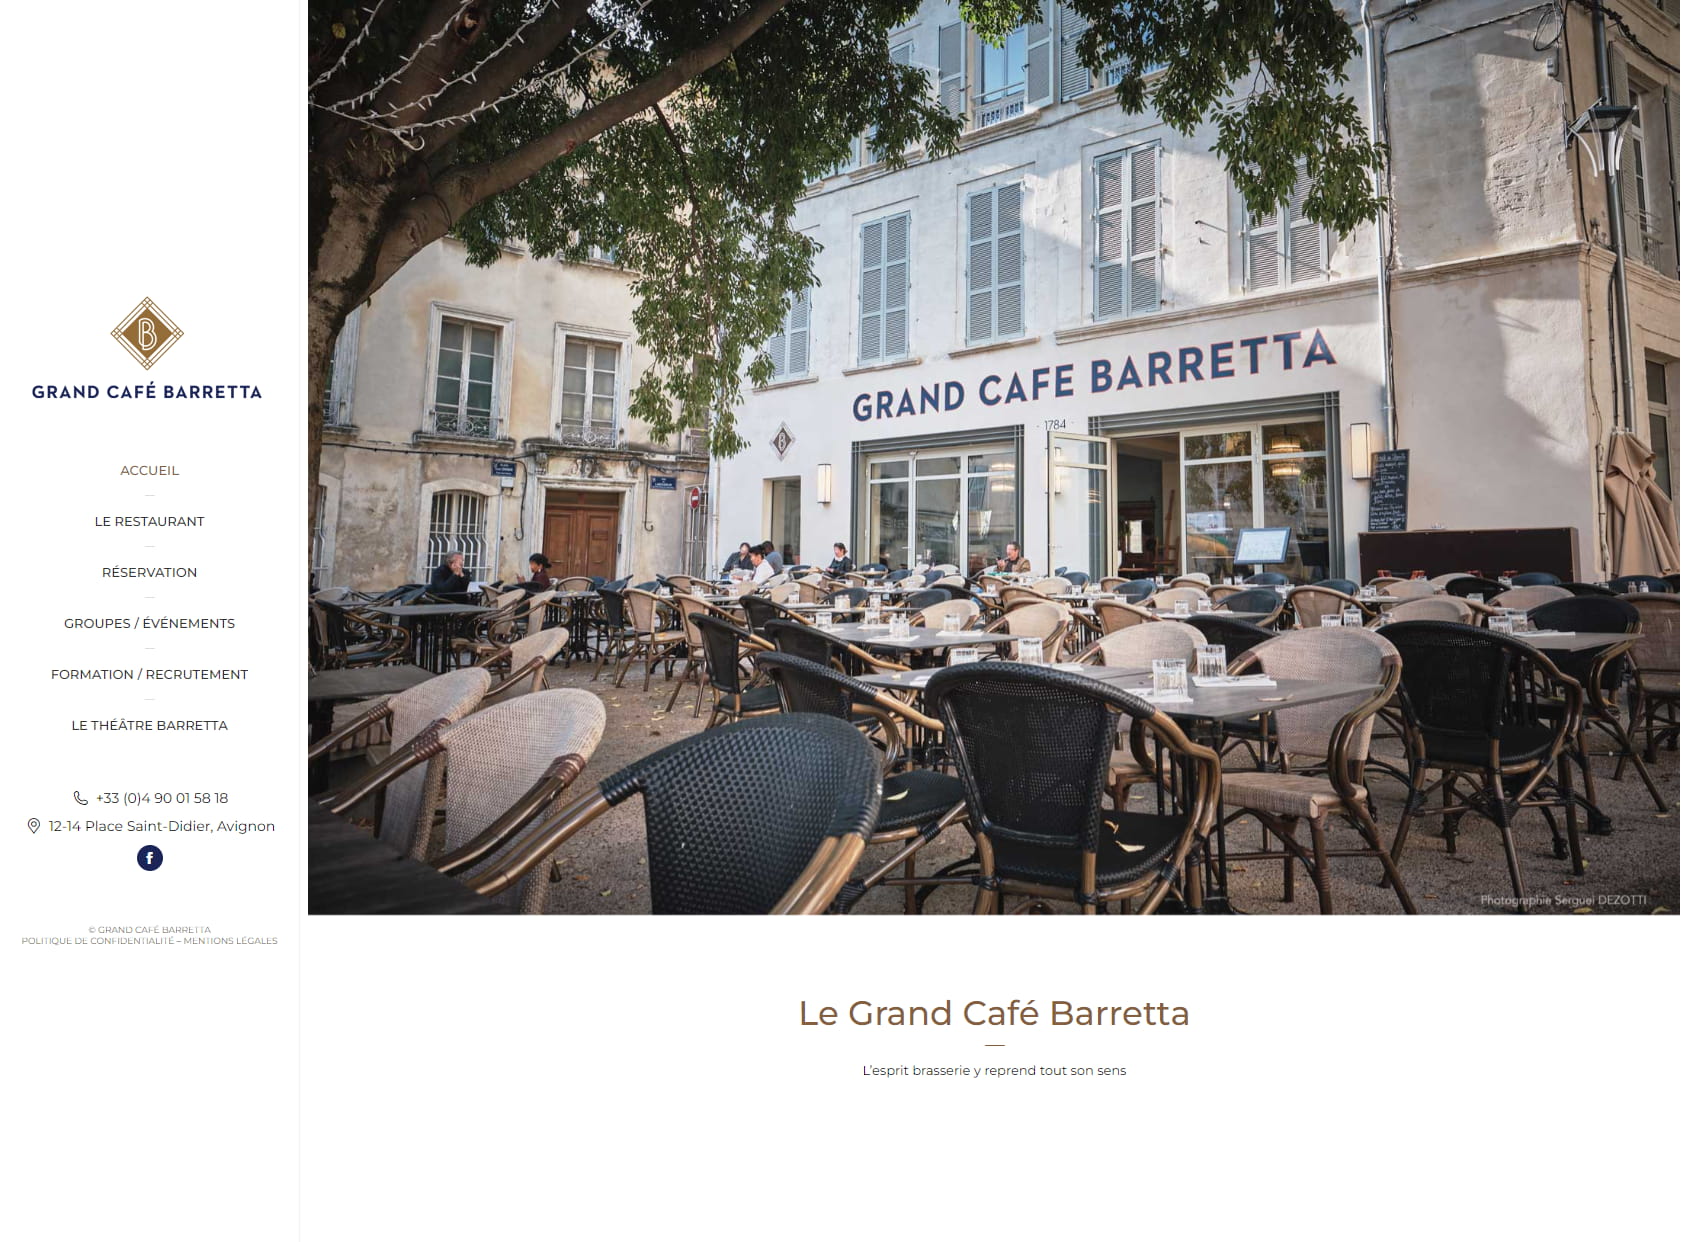 Grand Cafe Barretta